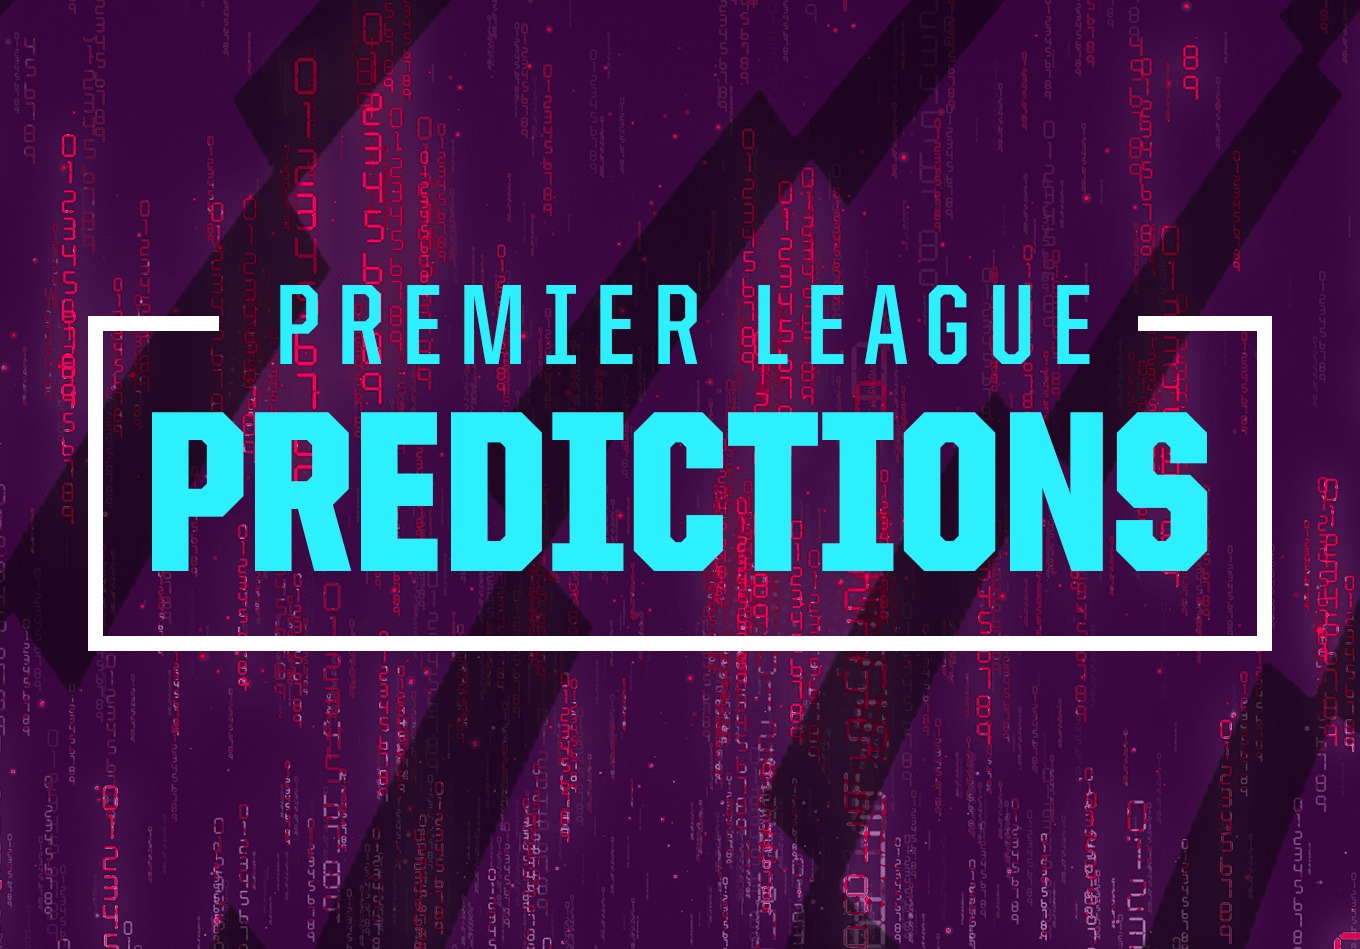 score predictions week 15